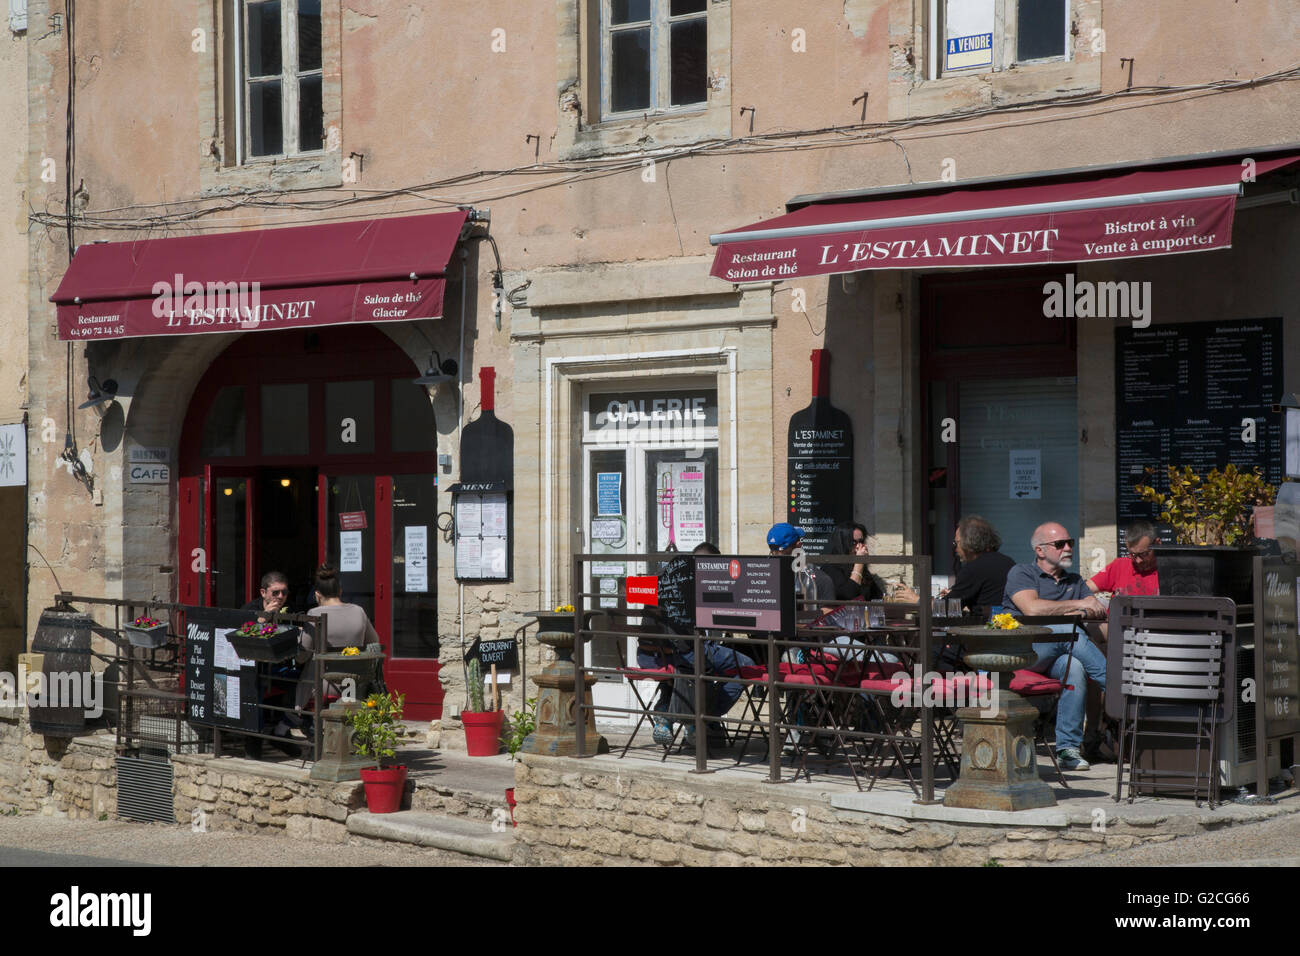 Estaminet Restaurant, Bar and Cafe, Gordes, France Stock Photo